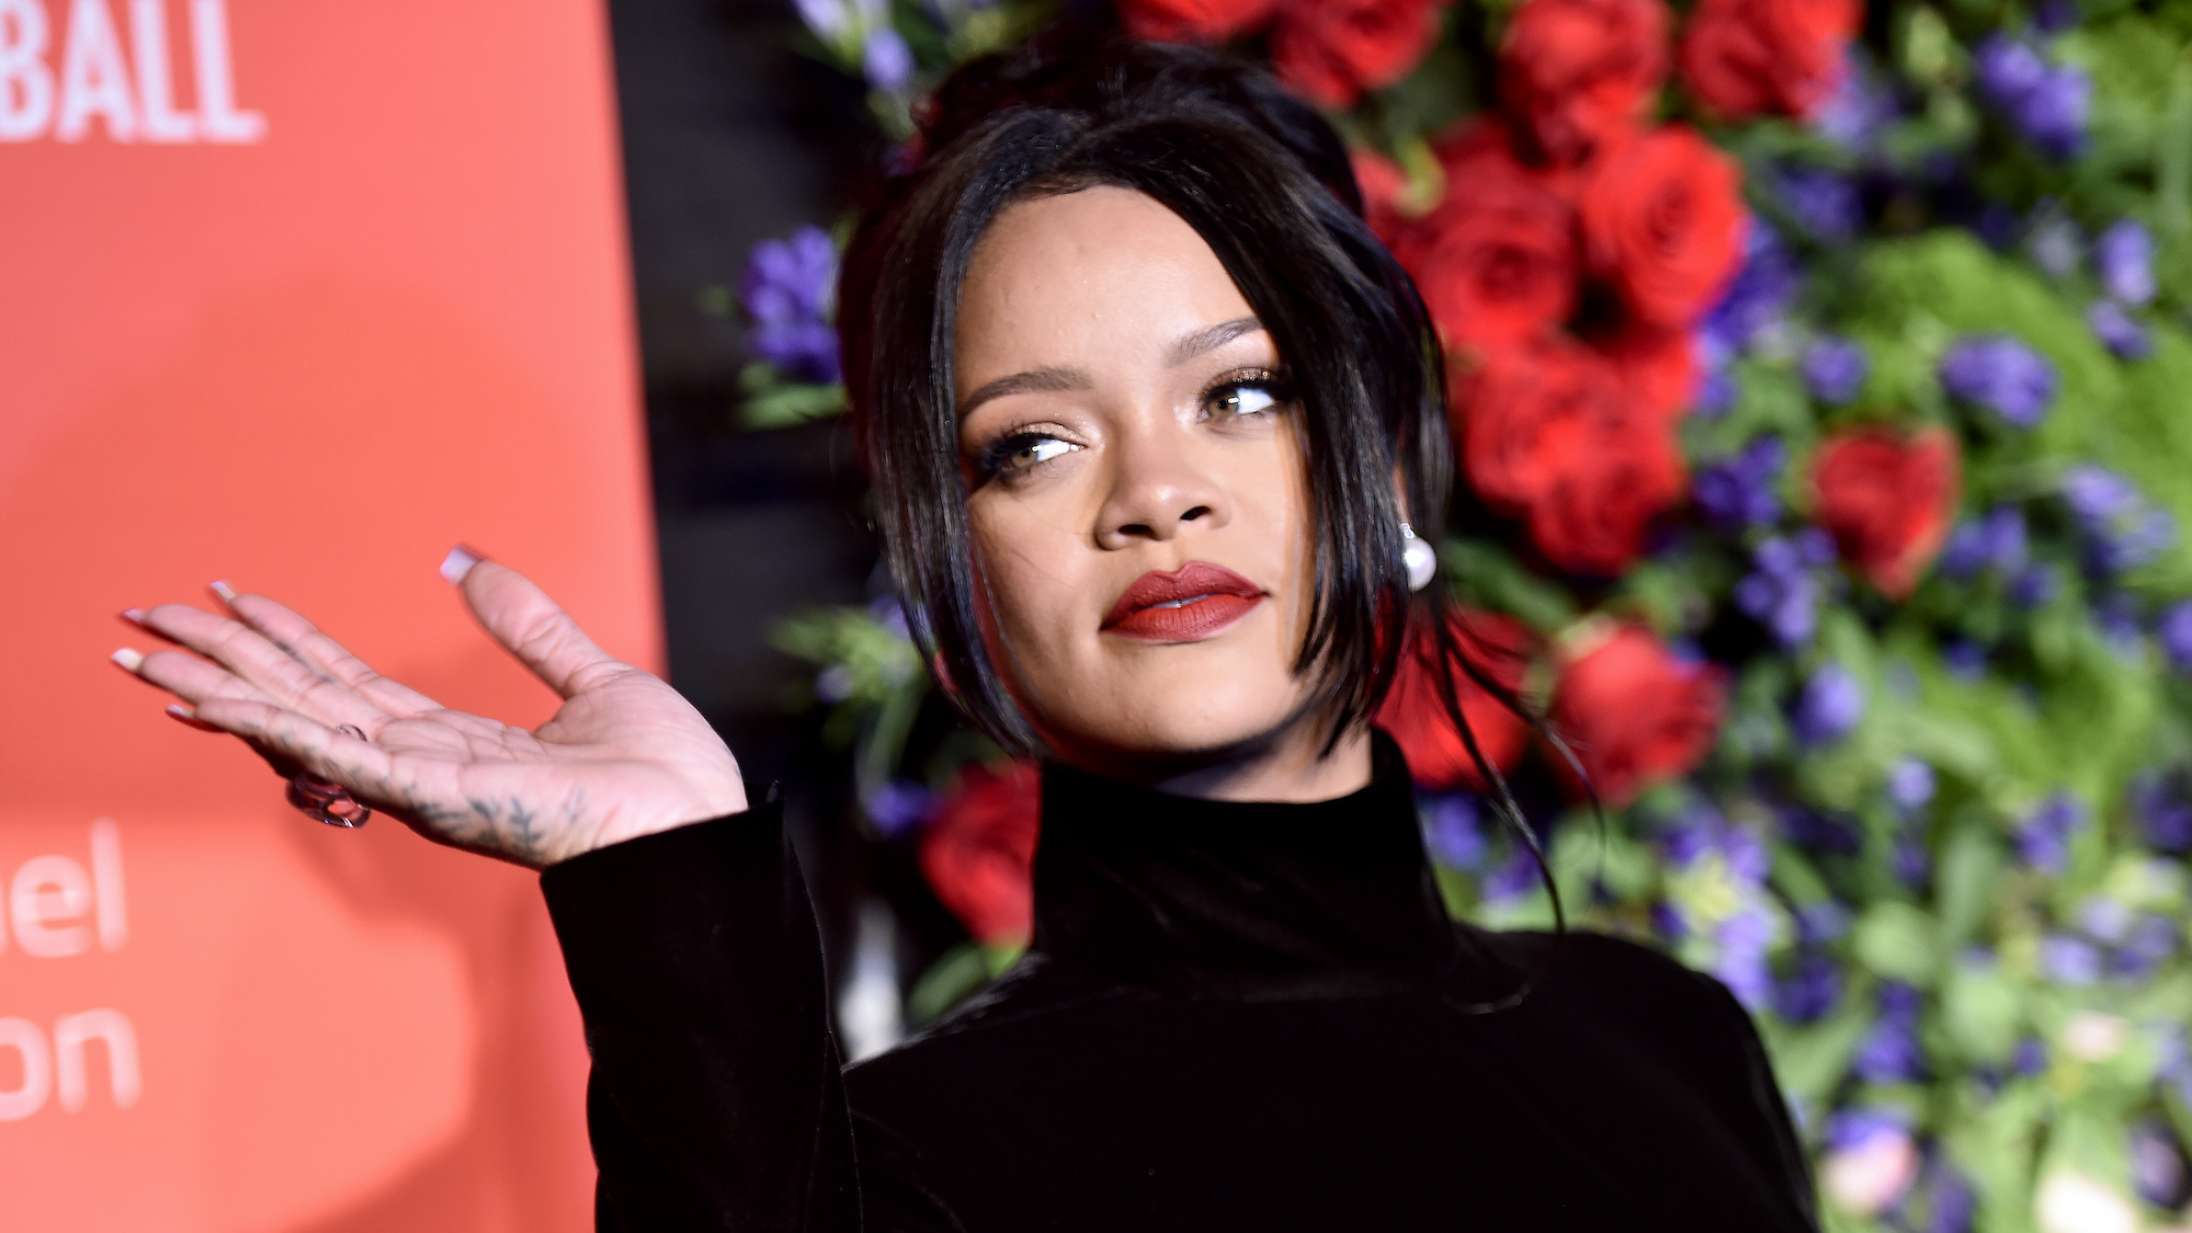 De fire bedste looks til Rihannas Diamond Ball – Cardi B udfordrede værten